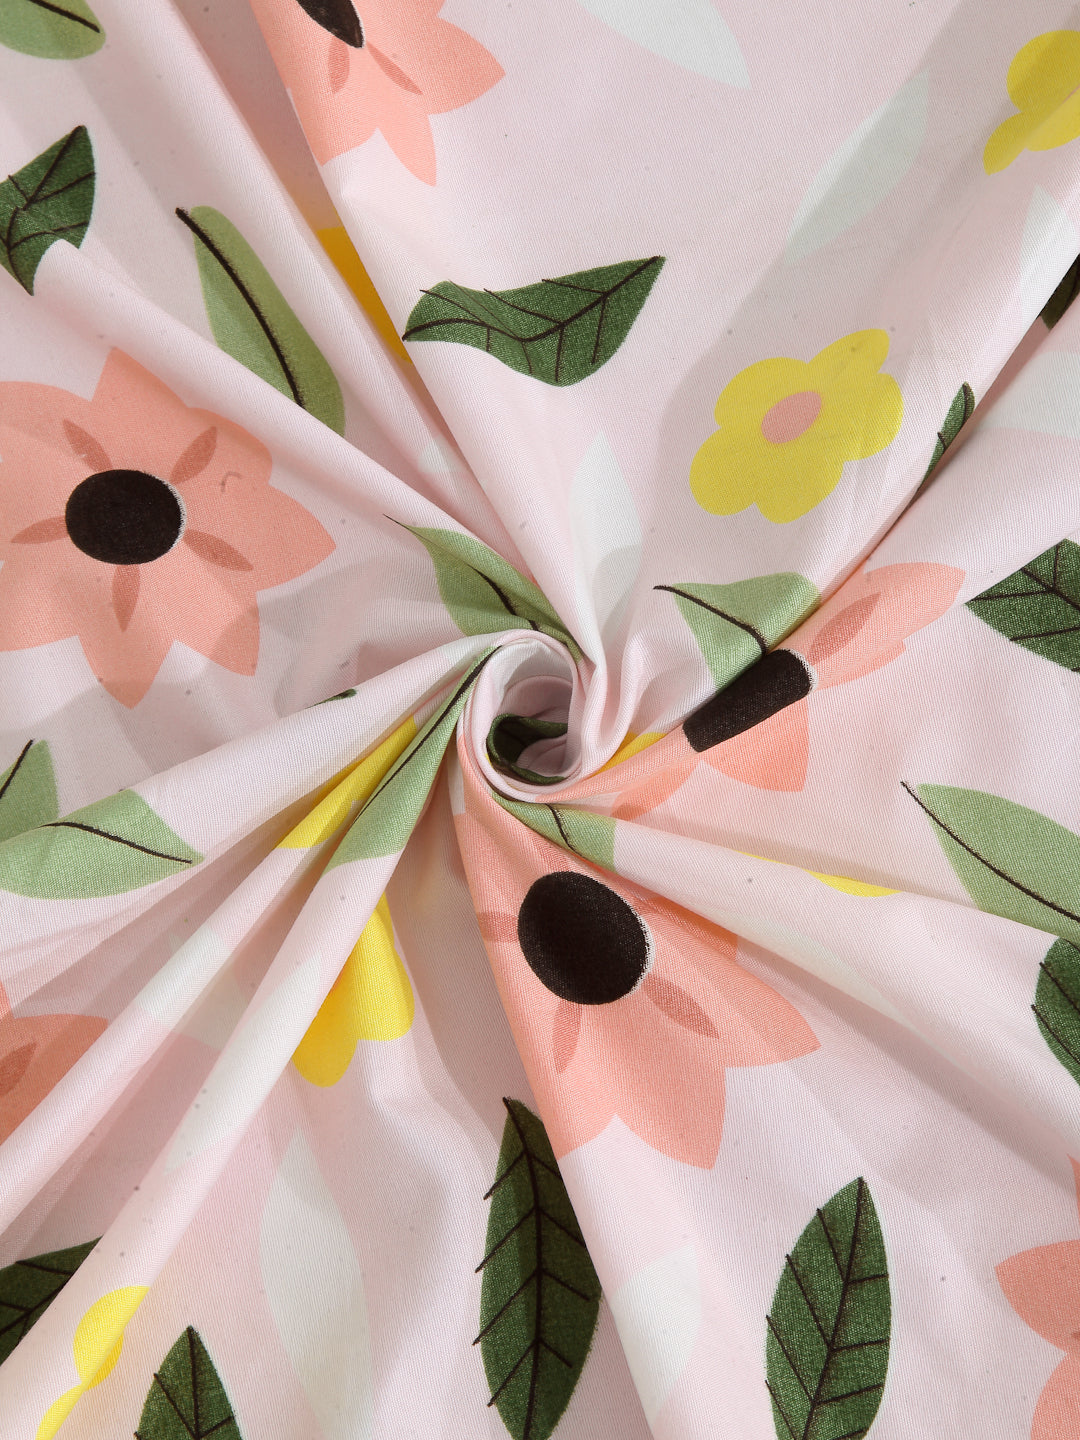 Arrabi Pink Floral Cotton Blend 8 SEATER Table Cover (215 X 150 cm)